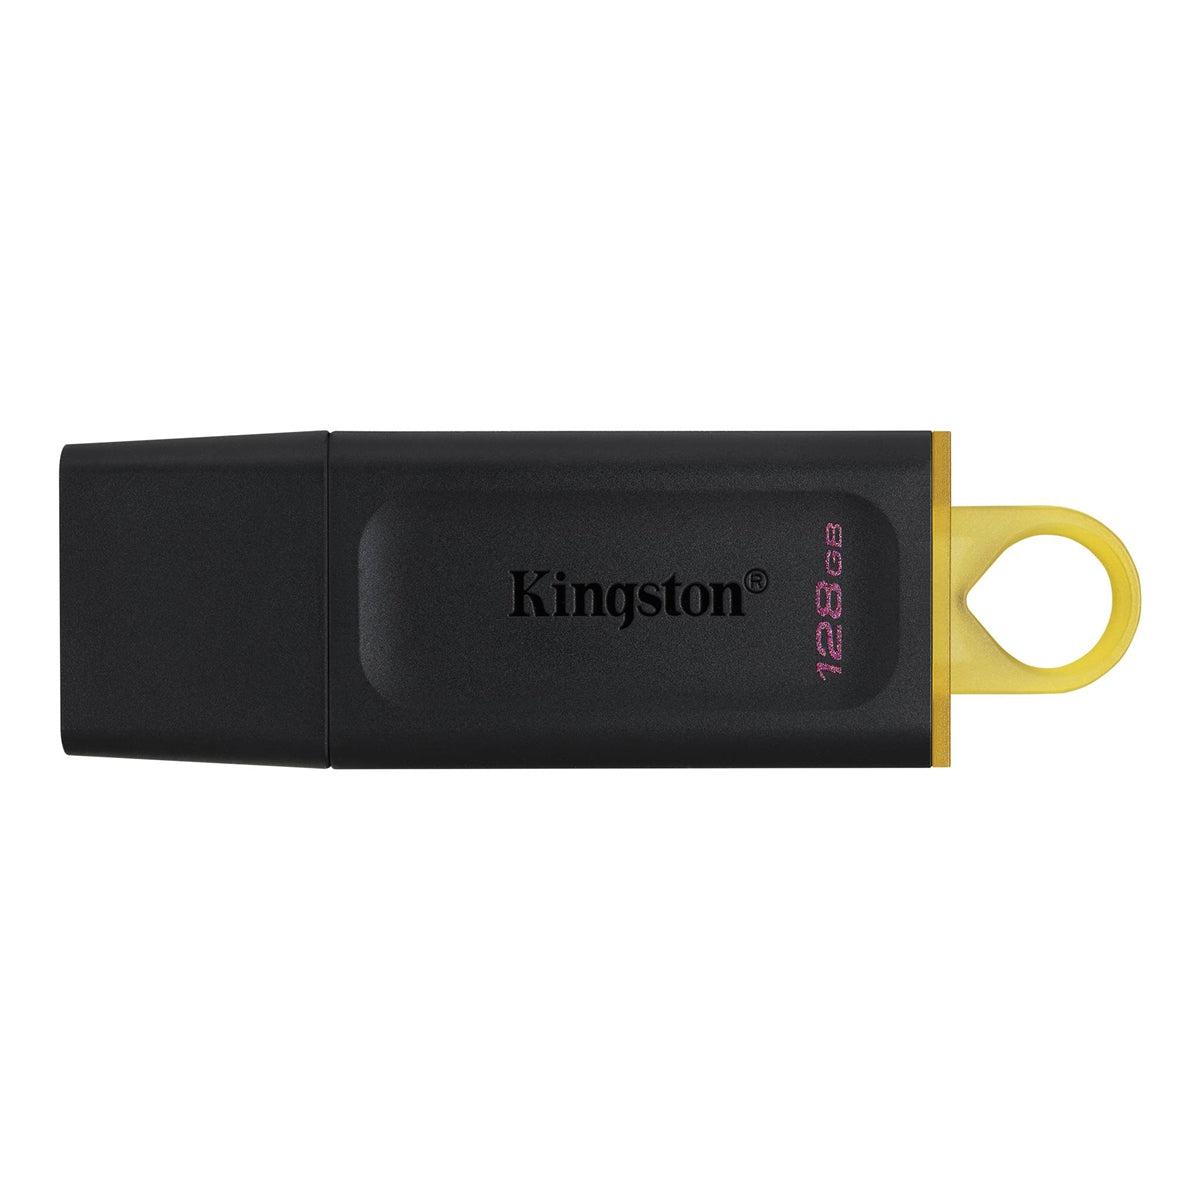 Kingston (USB) 3.2 Gen 1 Flash Drive 128GB Black & Yellow-Memory Cards & SSD-First Help Tech